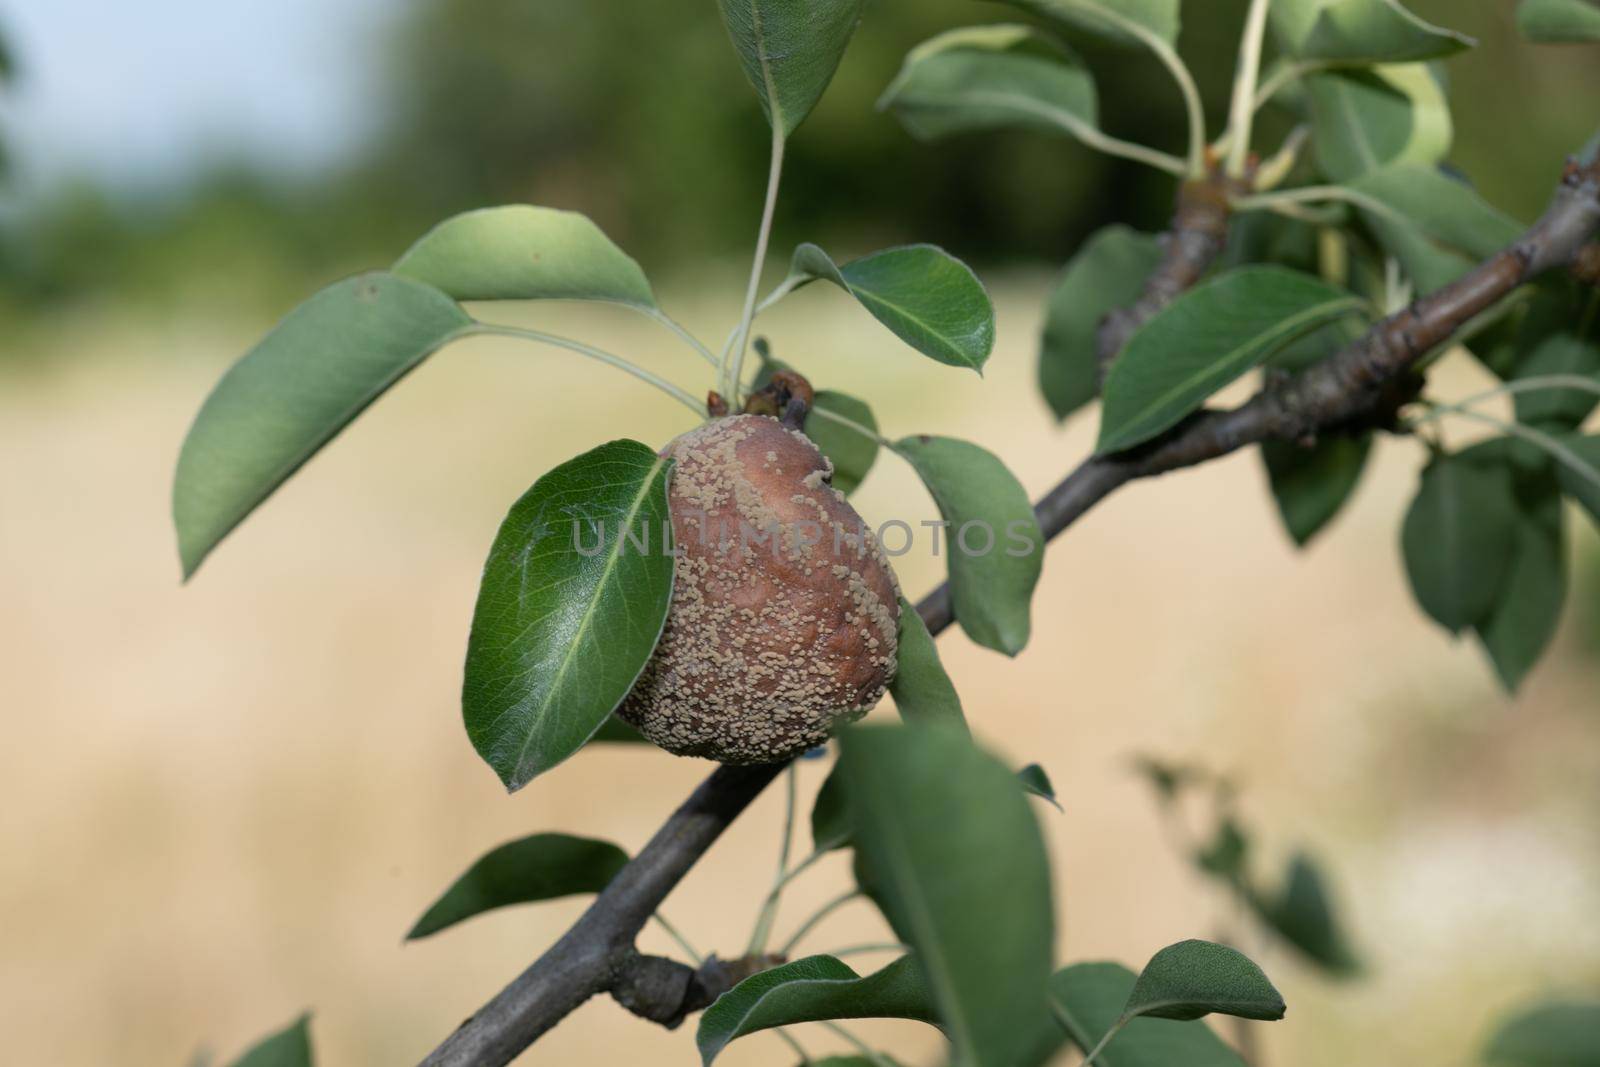 Rotten pear on branch of the fruit tree, Monilia laxa infestation plant disease by adamr